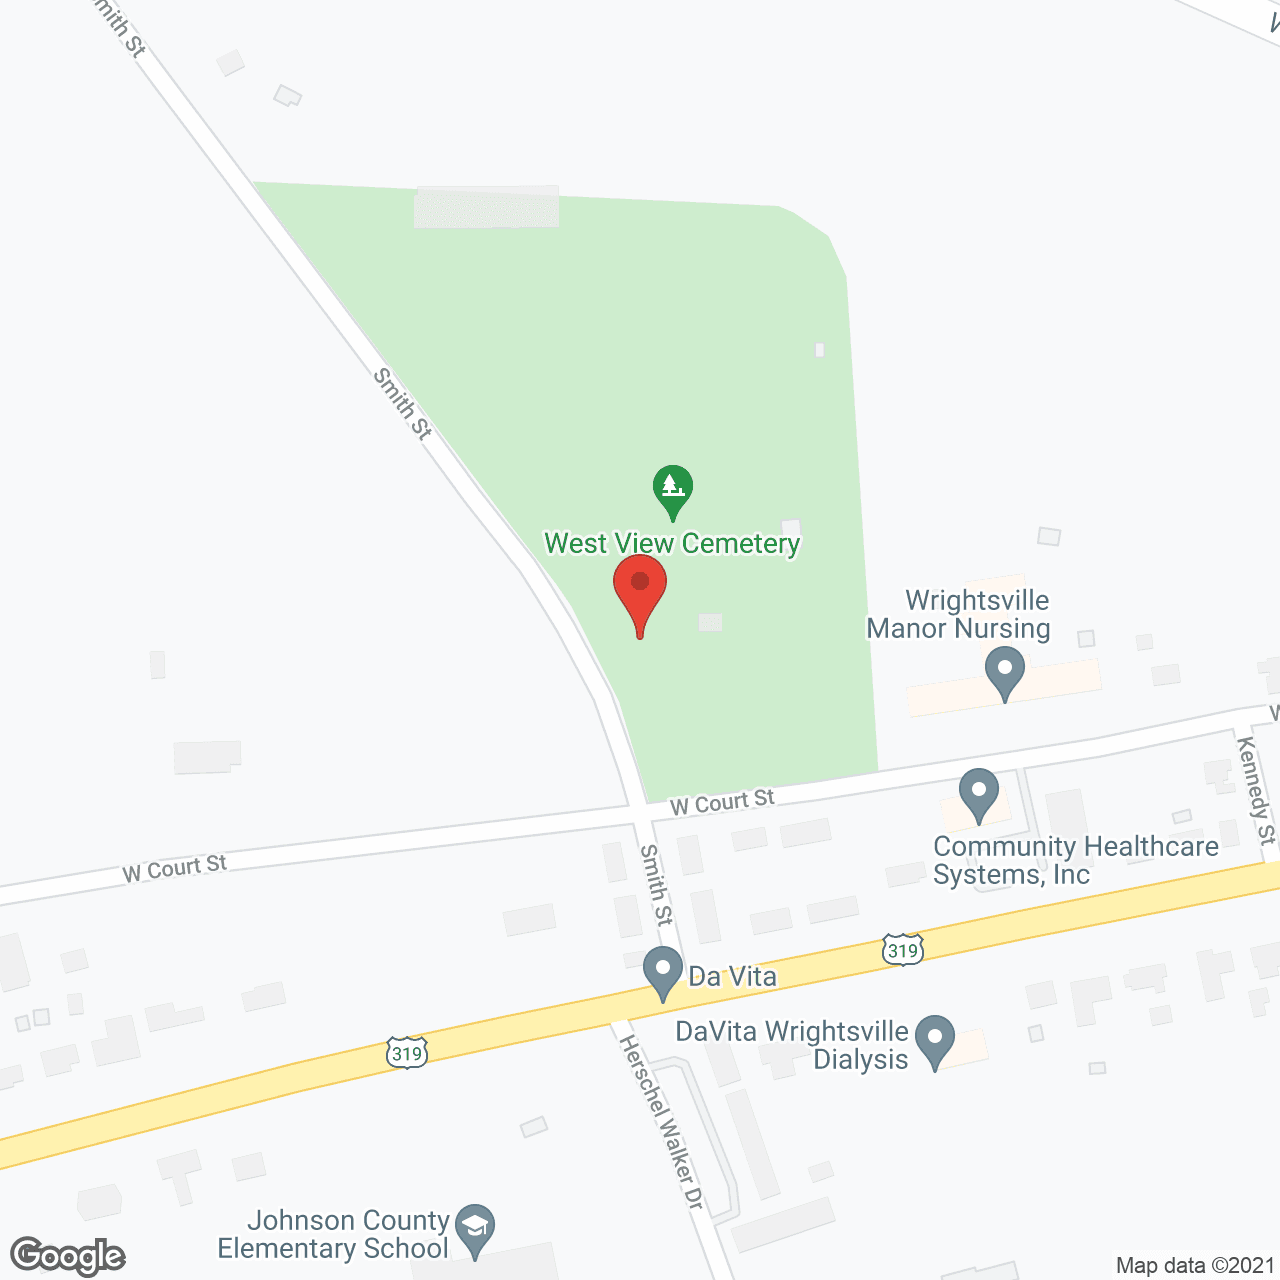 Wrightsville Manor Nursing in google map